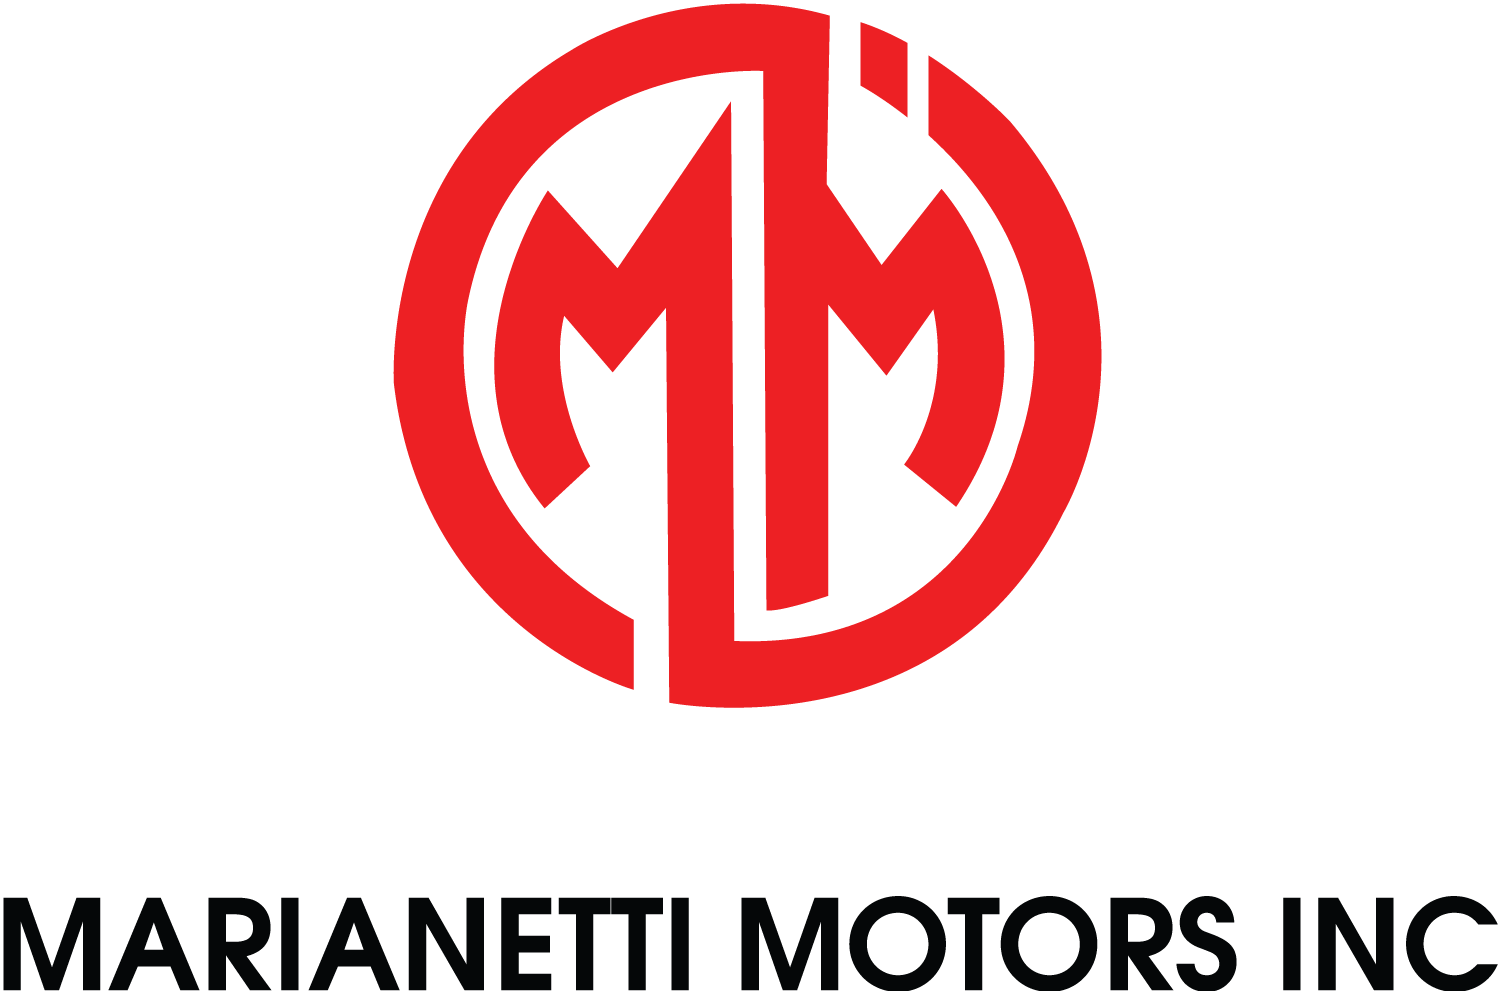 MMI Logo - Modern, Masculine, Automotive Logo Design for MMI Marianetti Motors